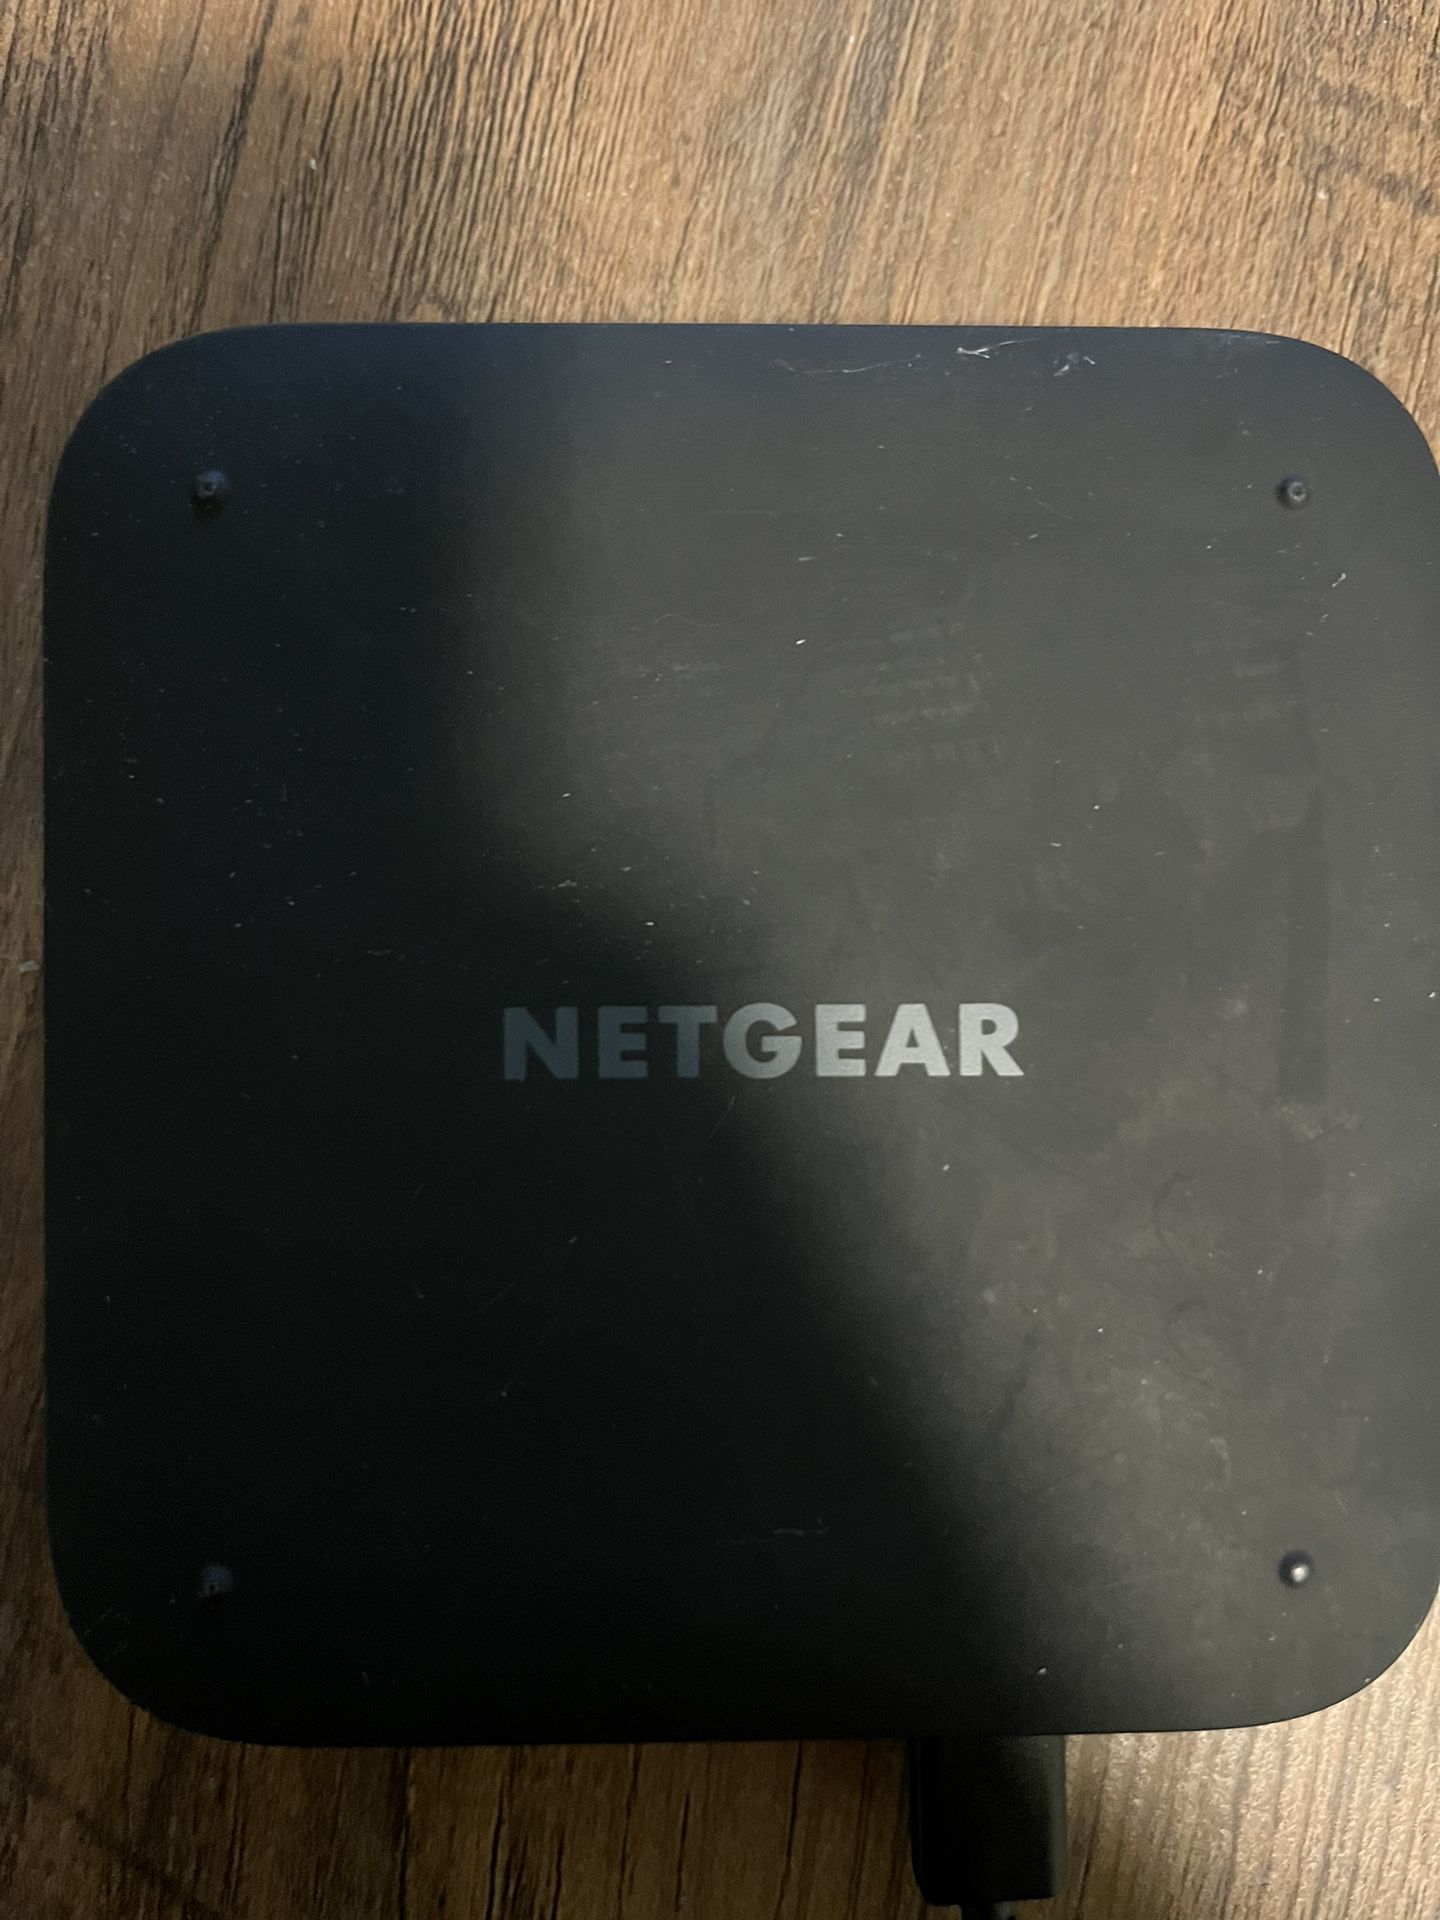 Netgear Nighthawk 5g Att Mobile Hotspot